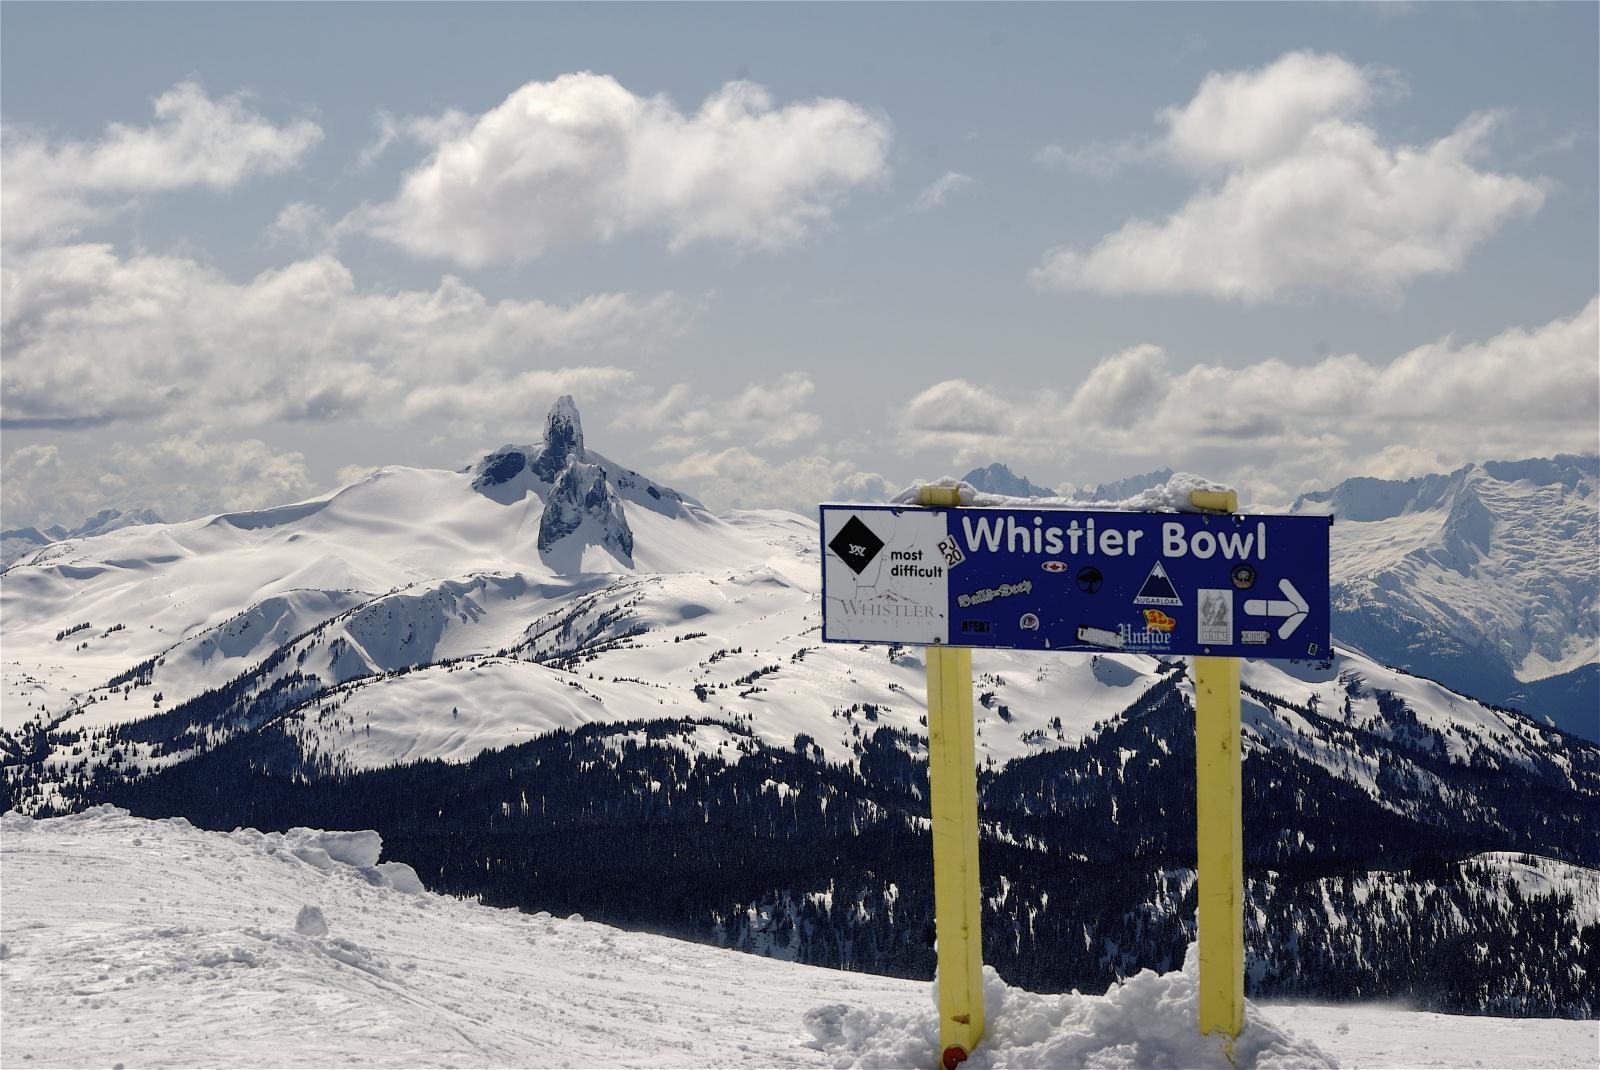 Whistler Bowl sign - Ski Canada Adventure